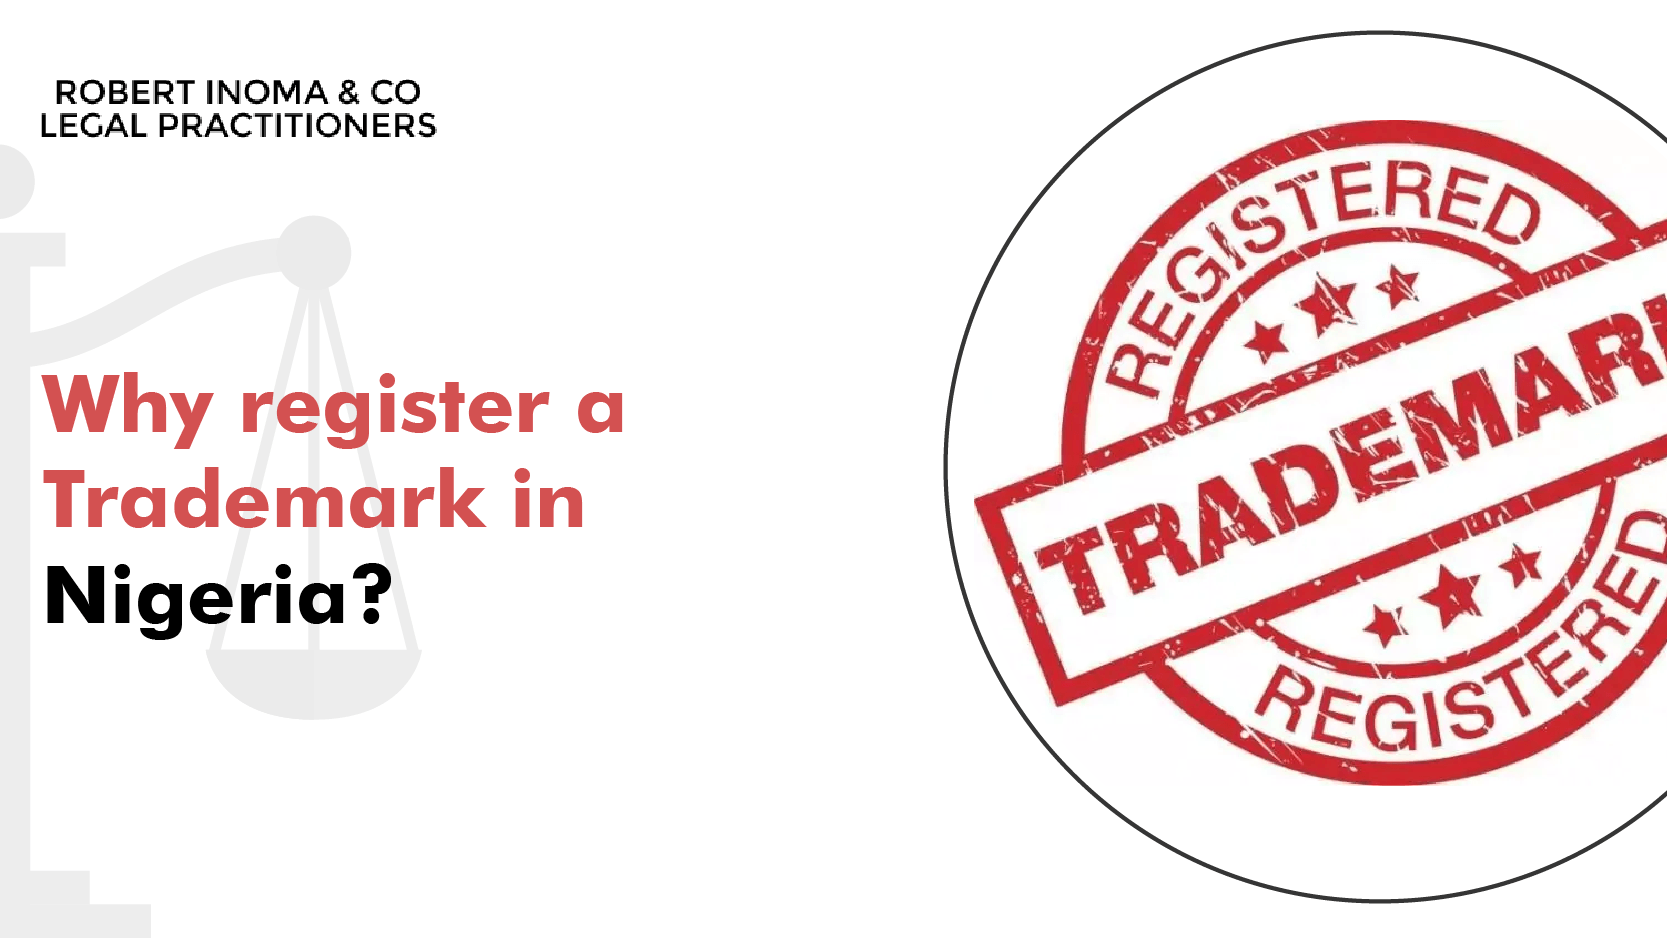 Why register a trademark in Nigeria?